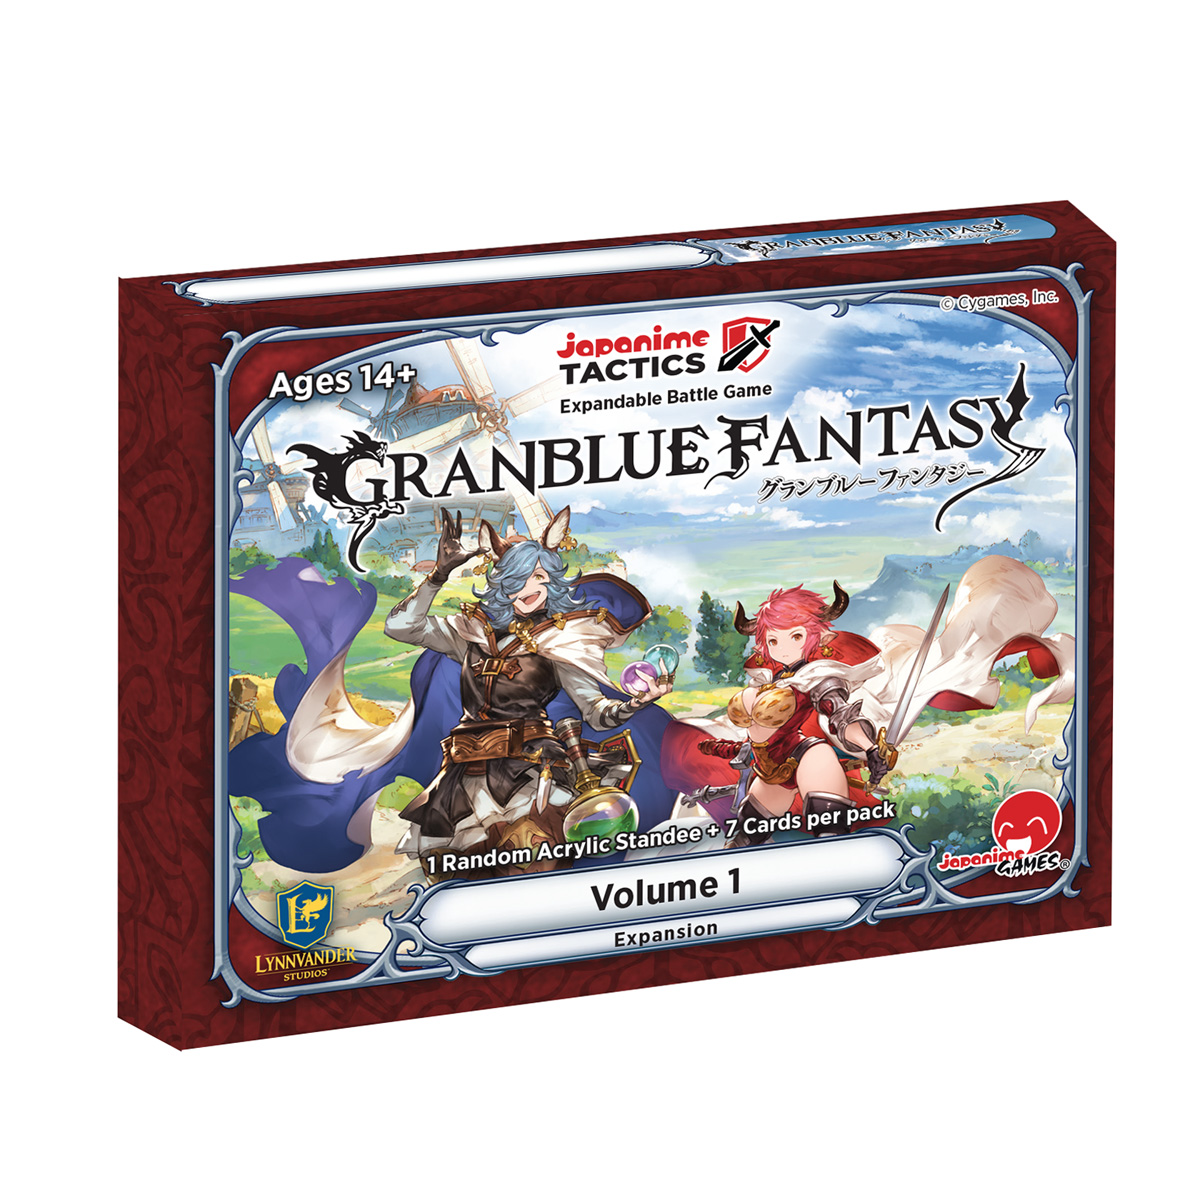 Japanime Tactics Granblue Fantasy Volume 1 Expansion Game